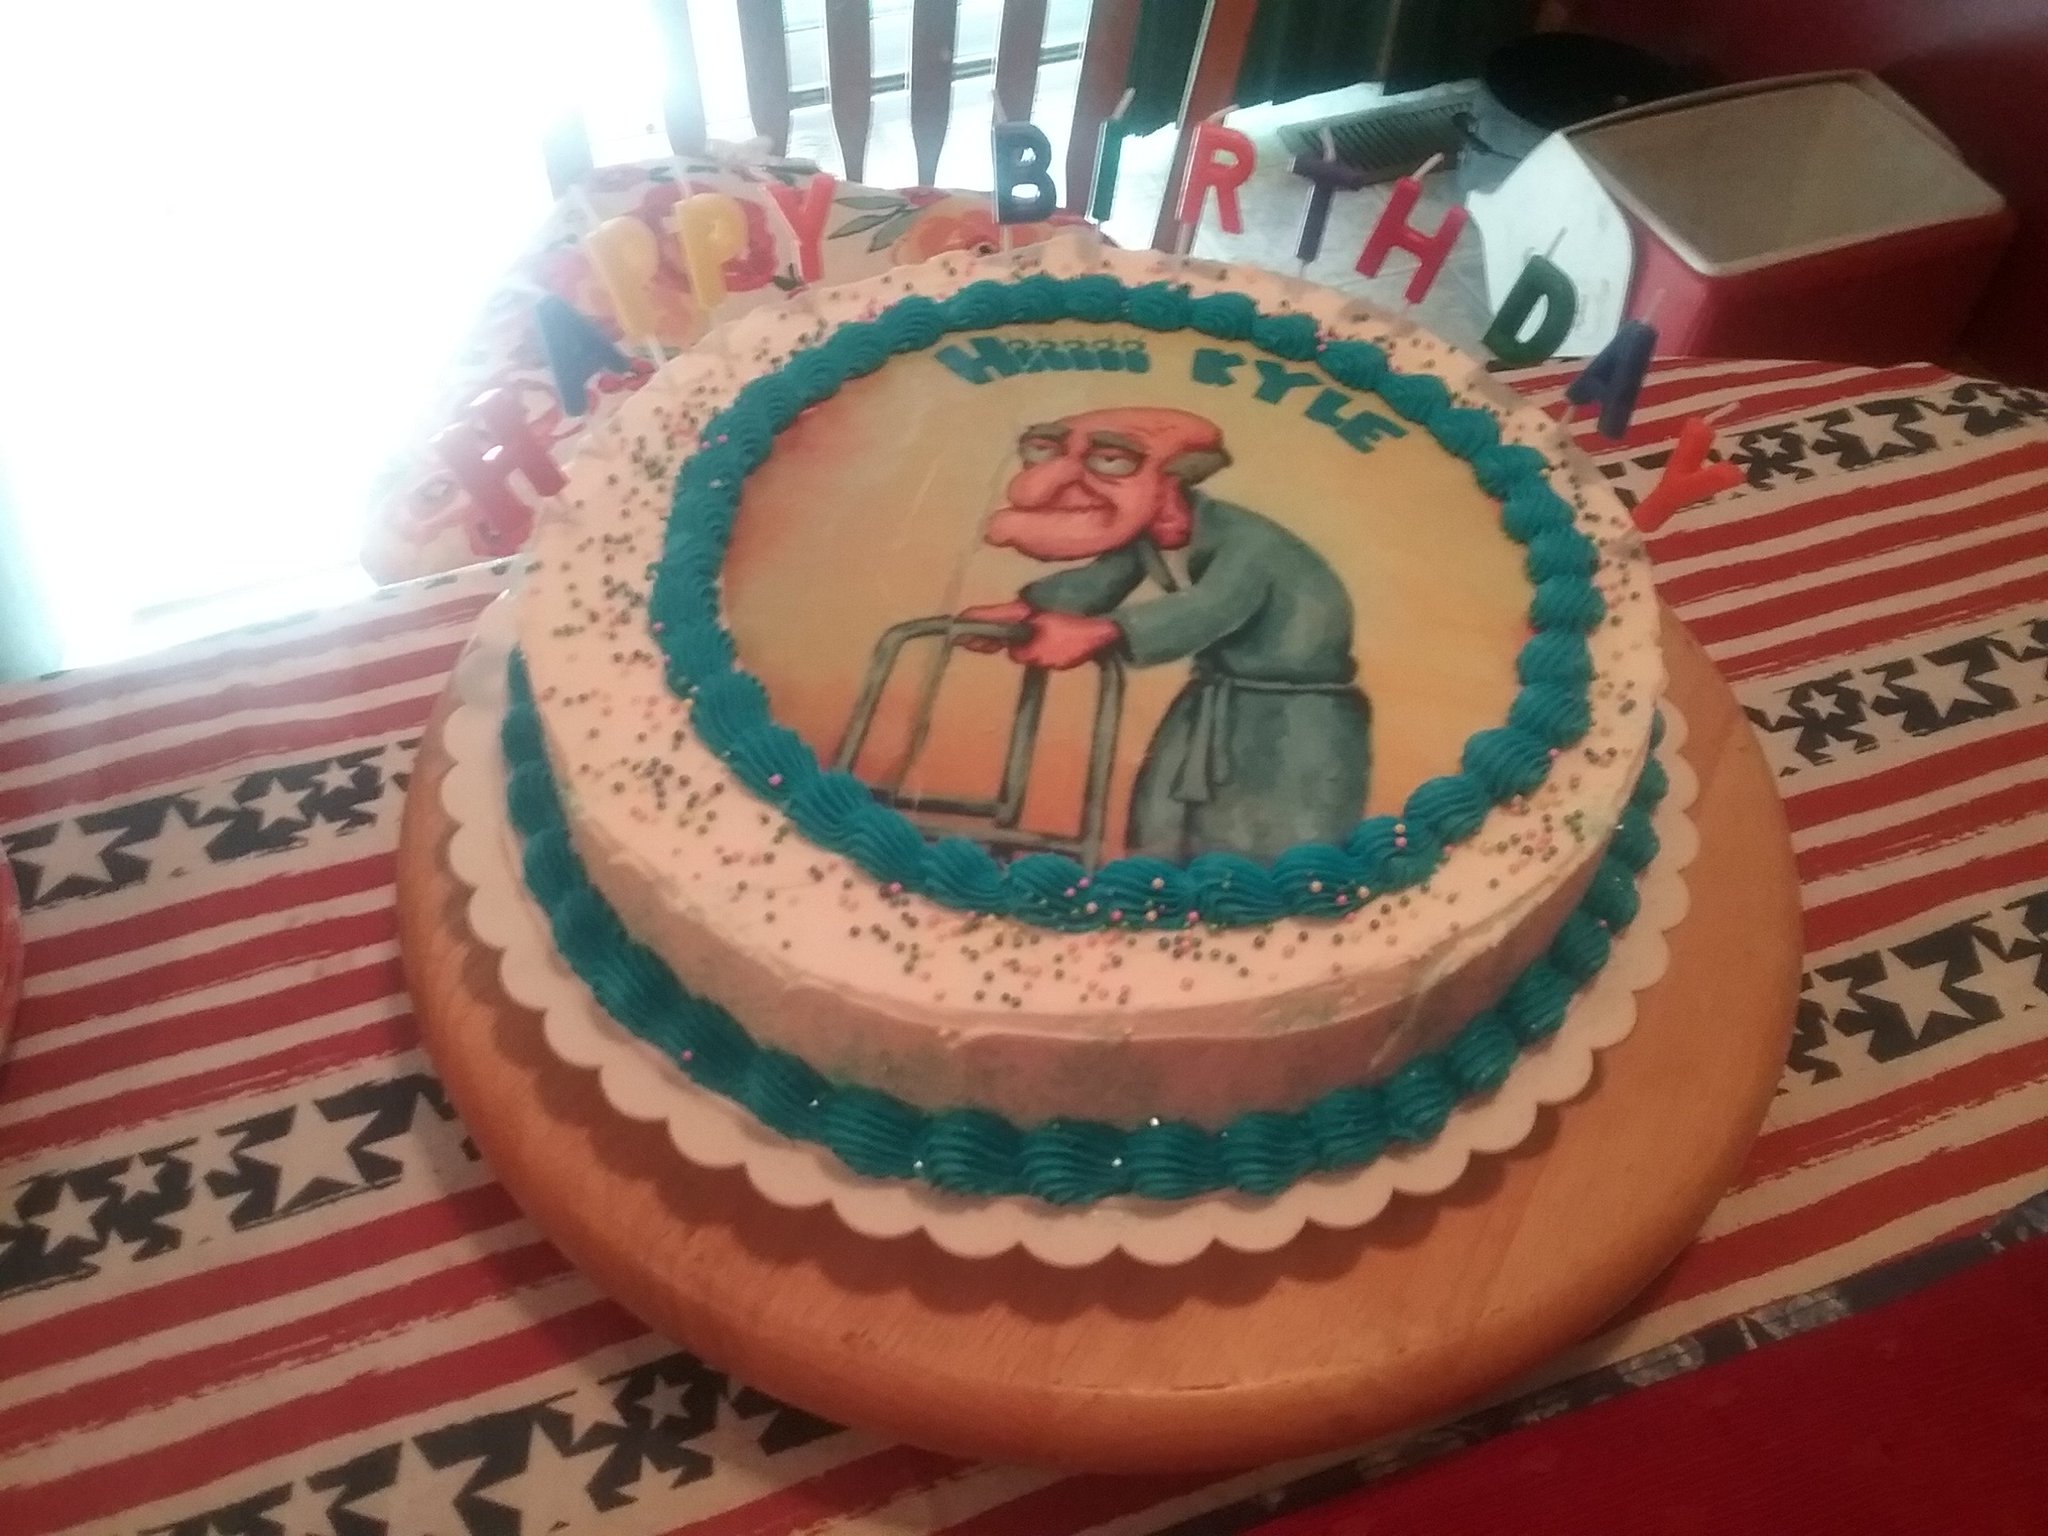 Sarah al Twitter: "Family guy Herbert the pervert cake, for my stepson Kyle. We love to tease him on his birthday.... "Hiiii Kyle". #BirthdayCake #HomemadeCake https://t.co/ATe8ak89UG" / Twitter